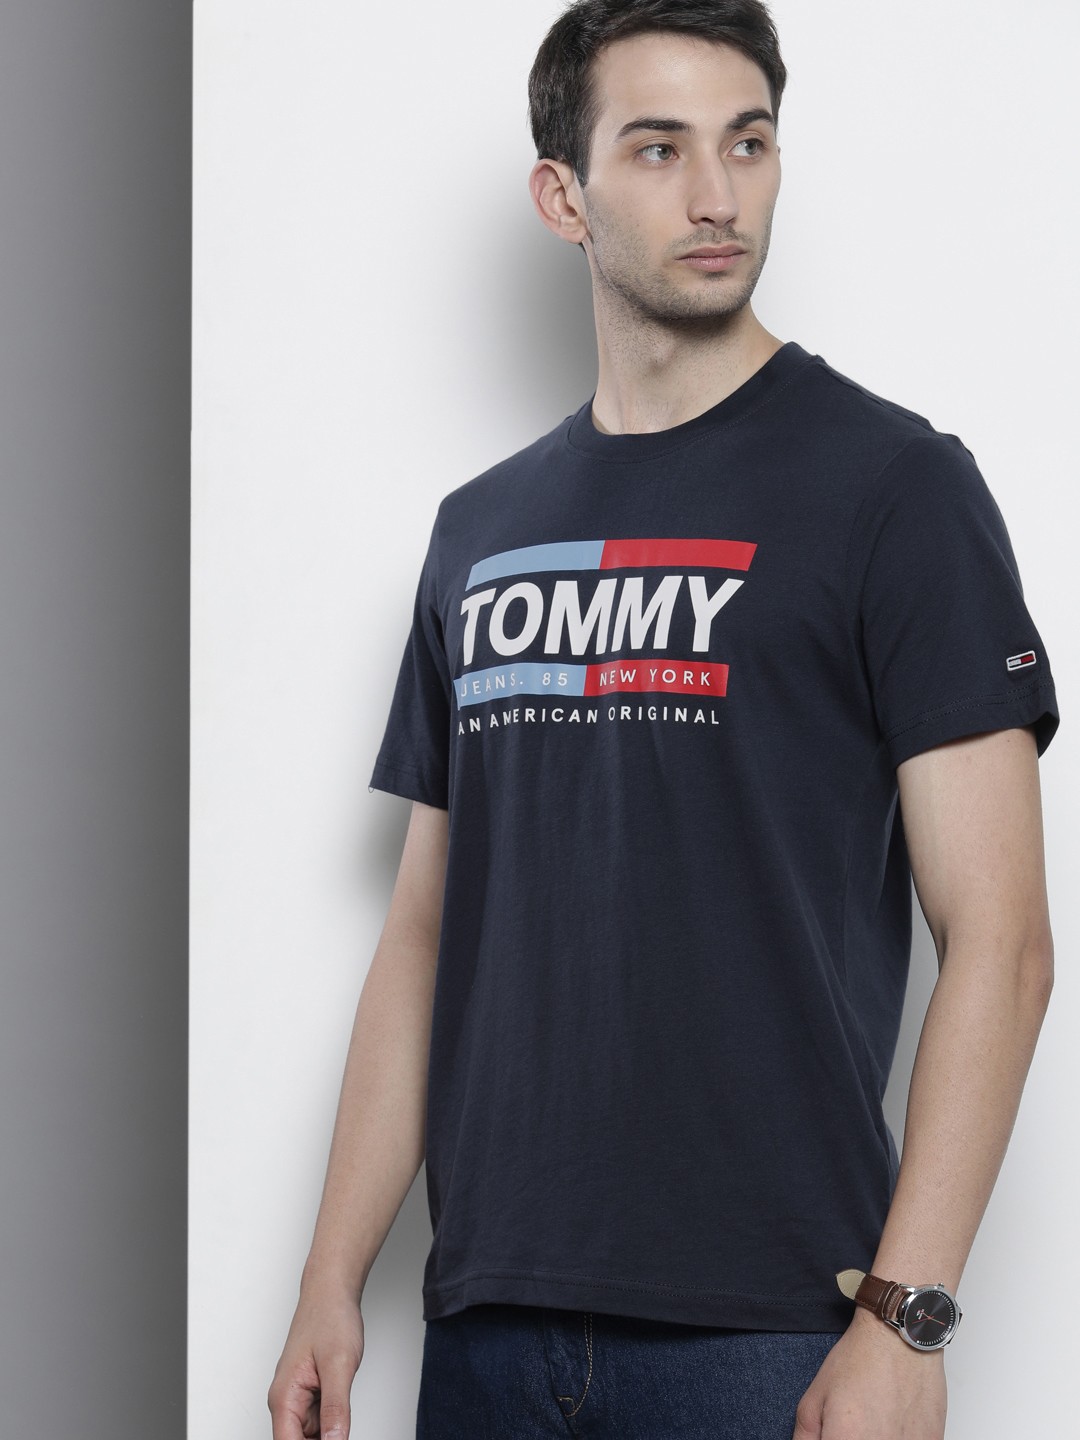 Best T-shirt Brands - Tommy Hilfiger